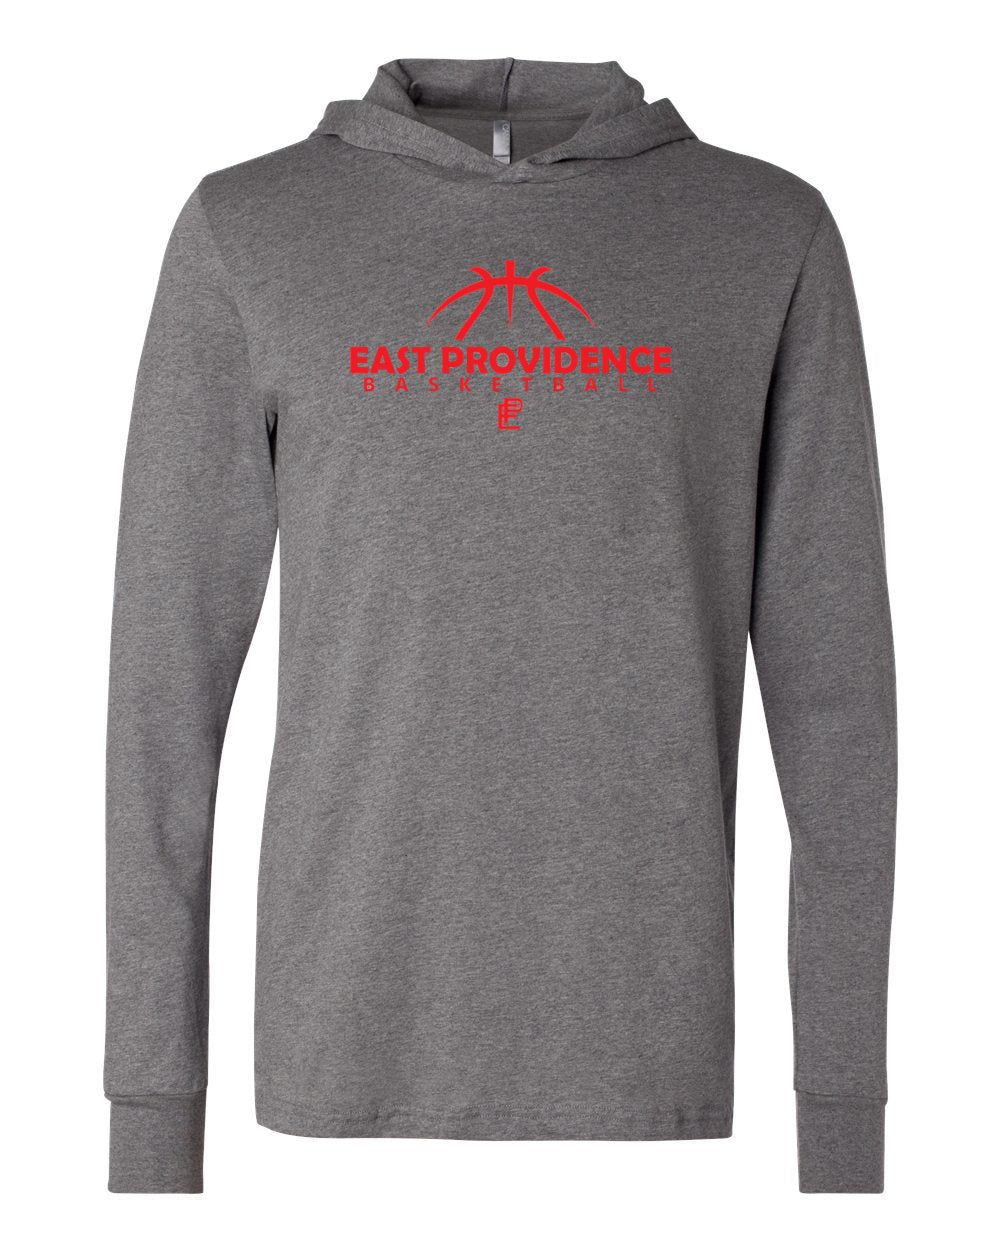 East Providence Basketball Grey Hooded Tee Red Print